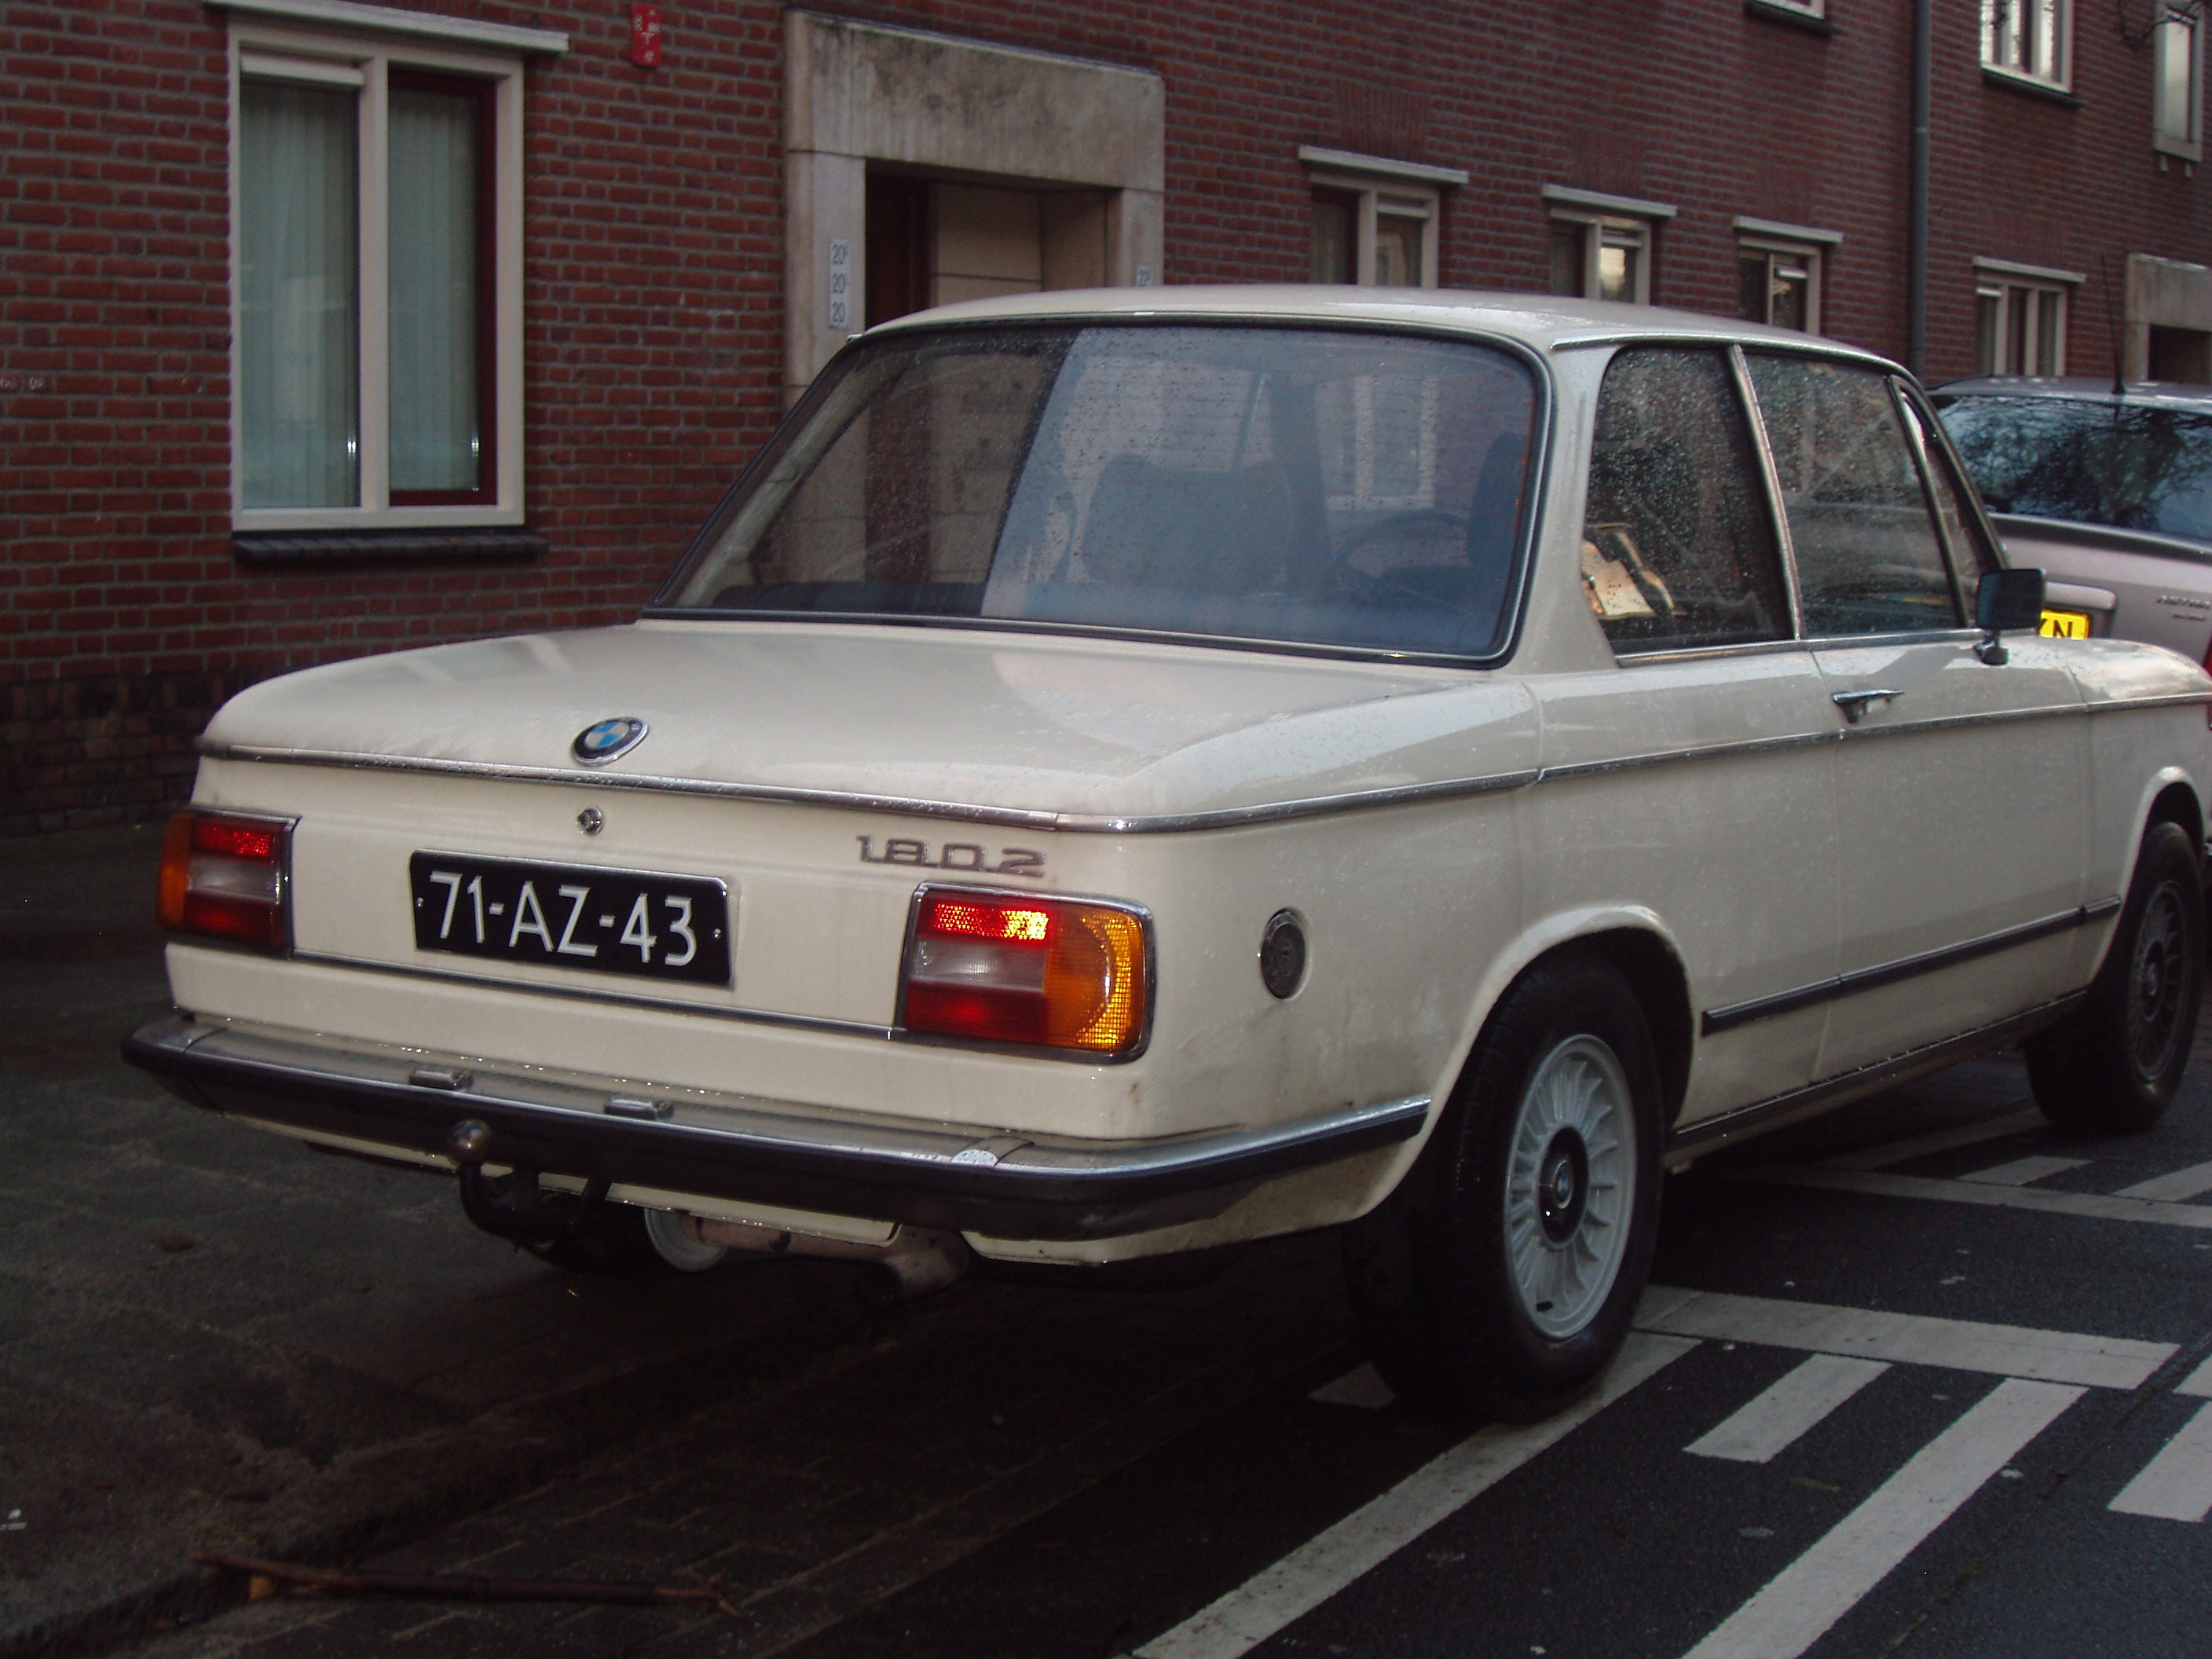 BMW 1802 | Flickr - Photo Sharing!